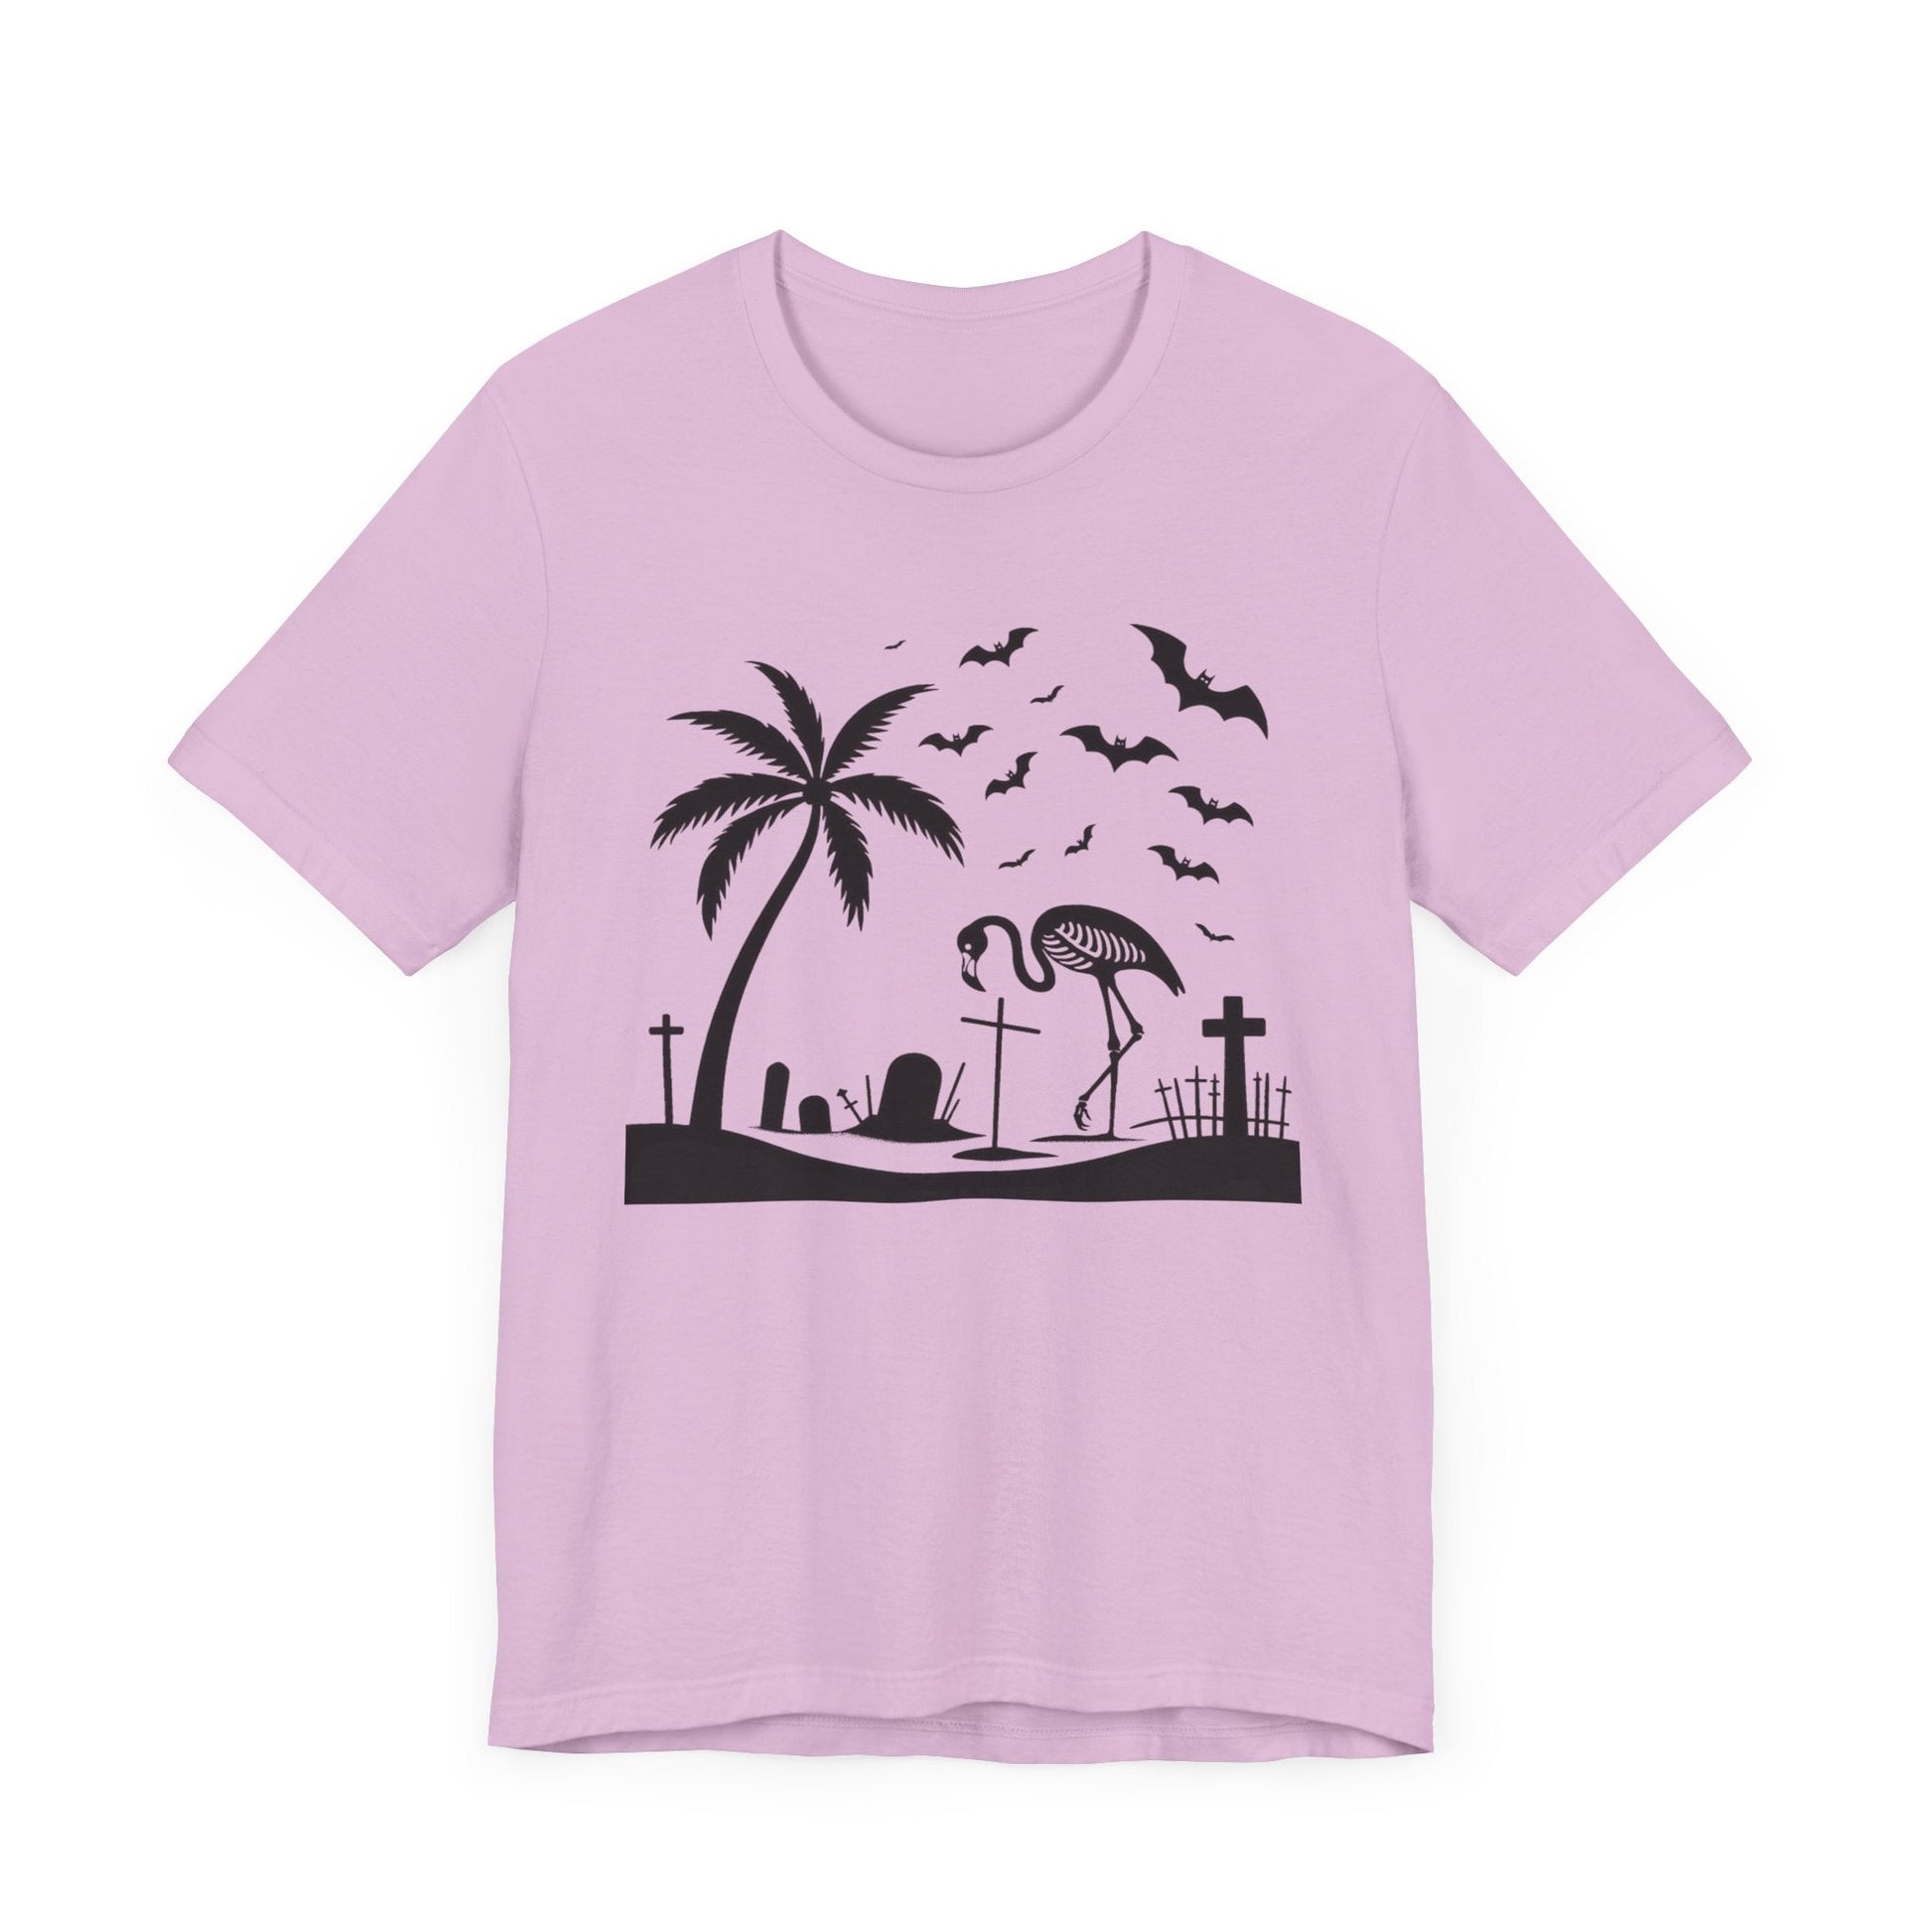 Flamingo Skeleton In Cemetery Short Sleeve Tee ShirtT - ShirtVTZdesignsLilacXSclothingCottonCrew neck